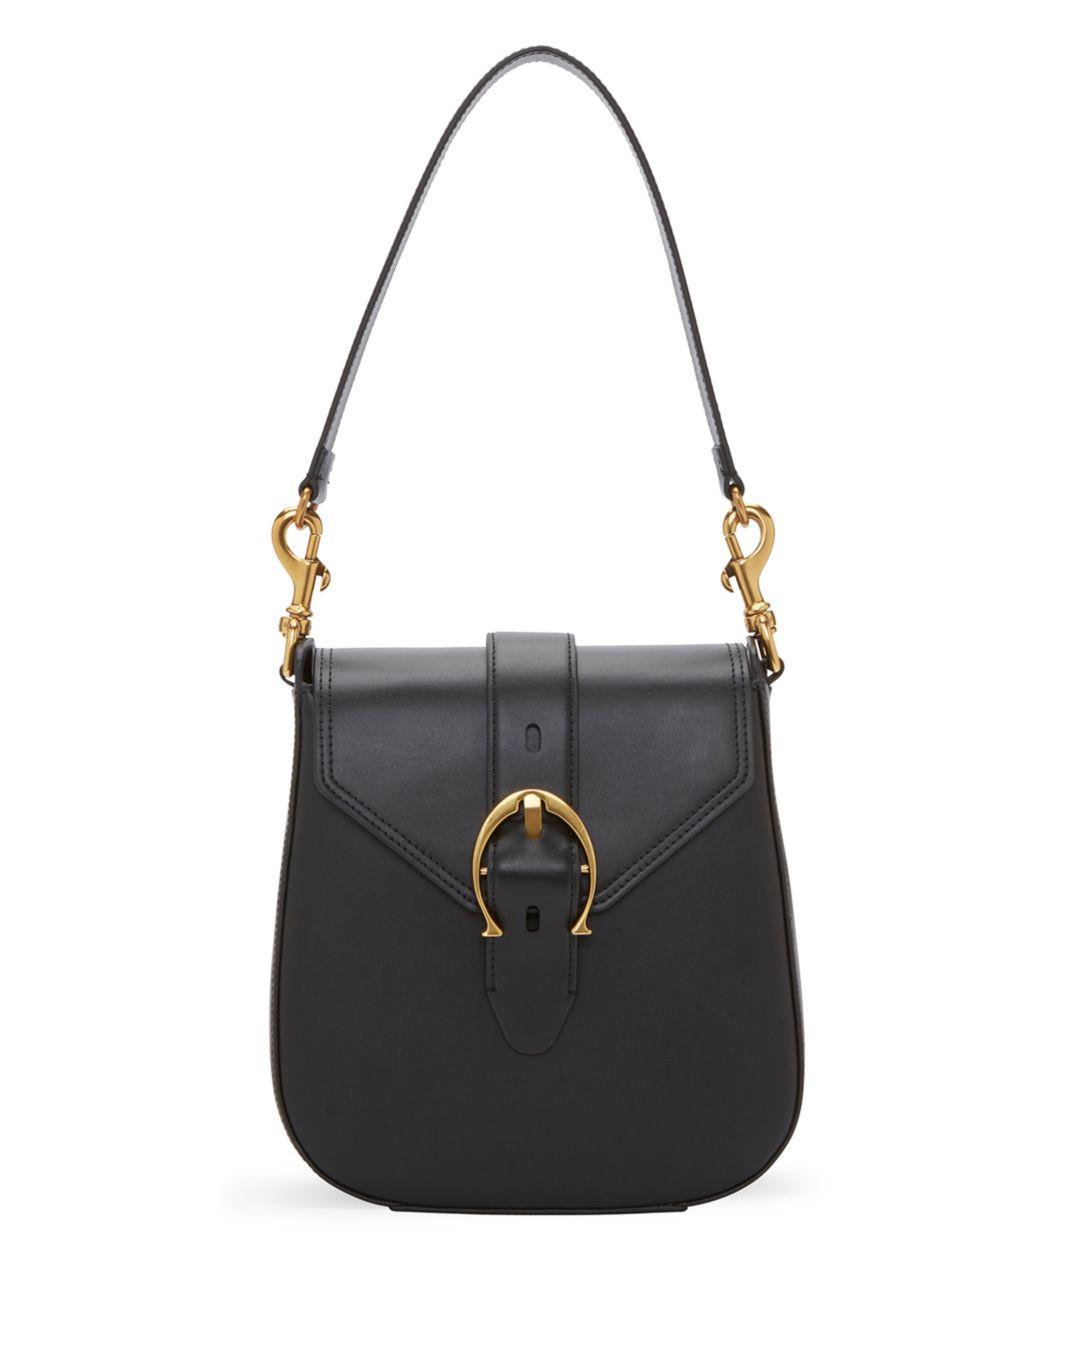 Etienne Aigner Mia Leather Shoulder Bag in Black | Lyst